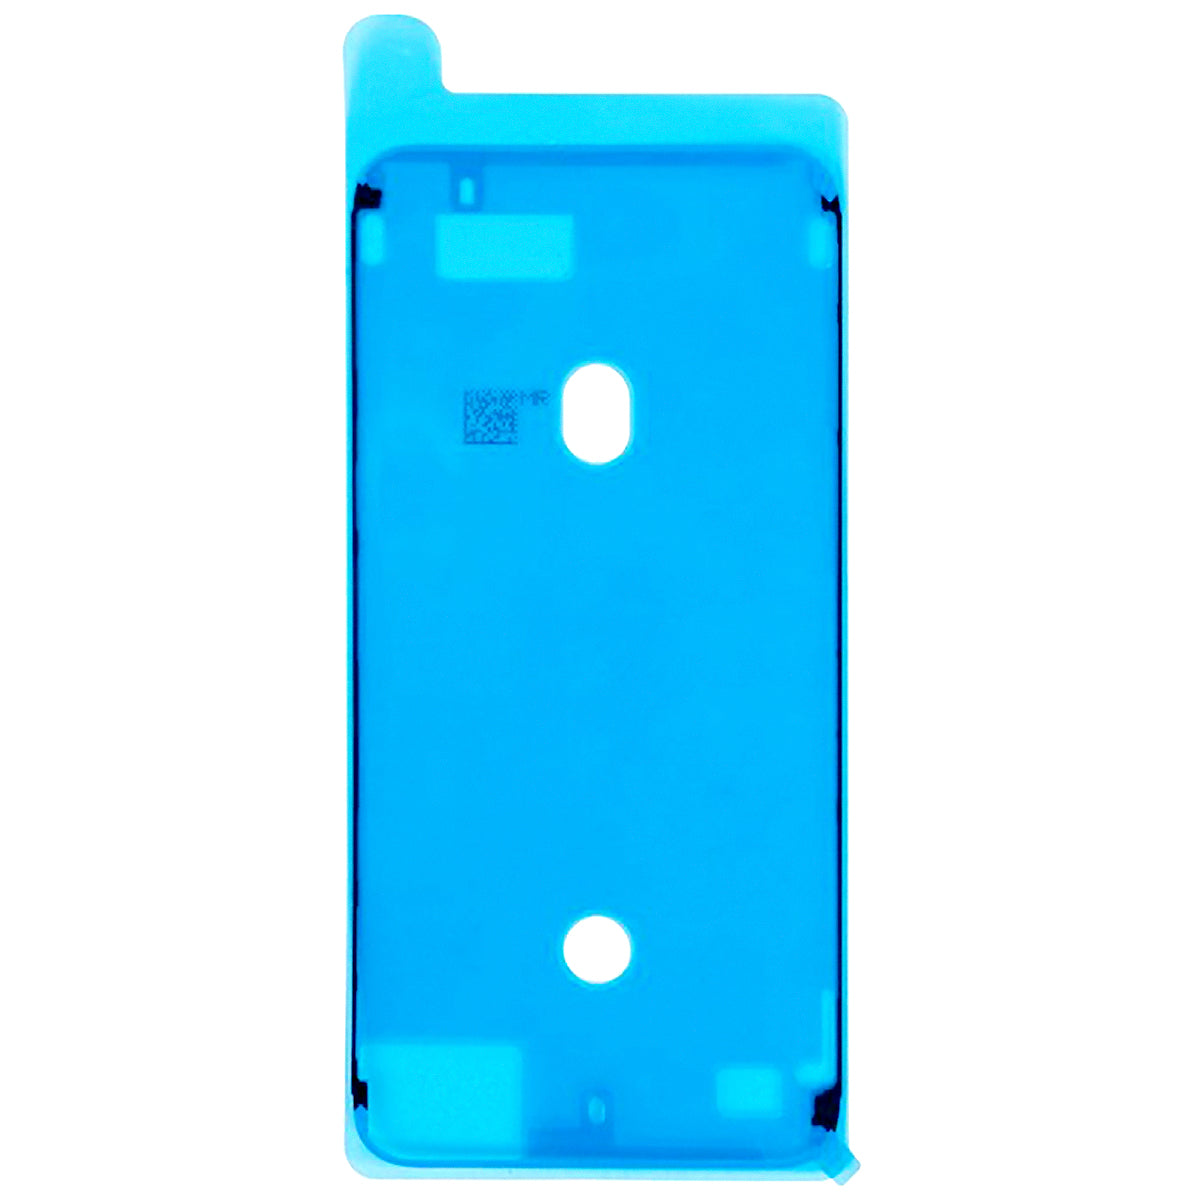 iPhone 6S Rahmen Display Kleber Klebepad Adhesive LCD Schwarz Wasser Dichtung Kleberahmen - dinngs